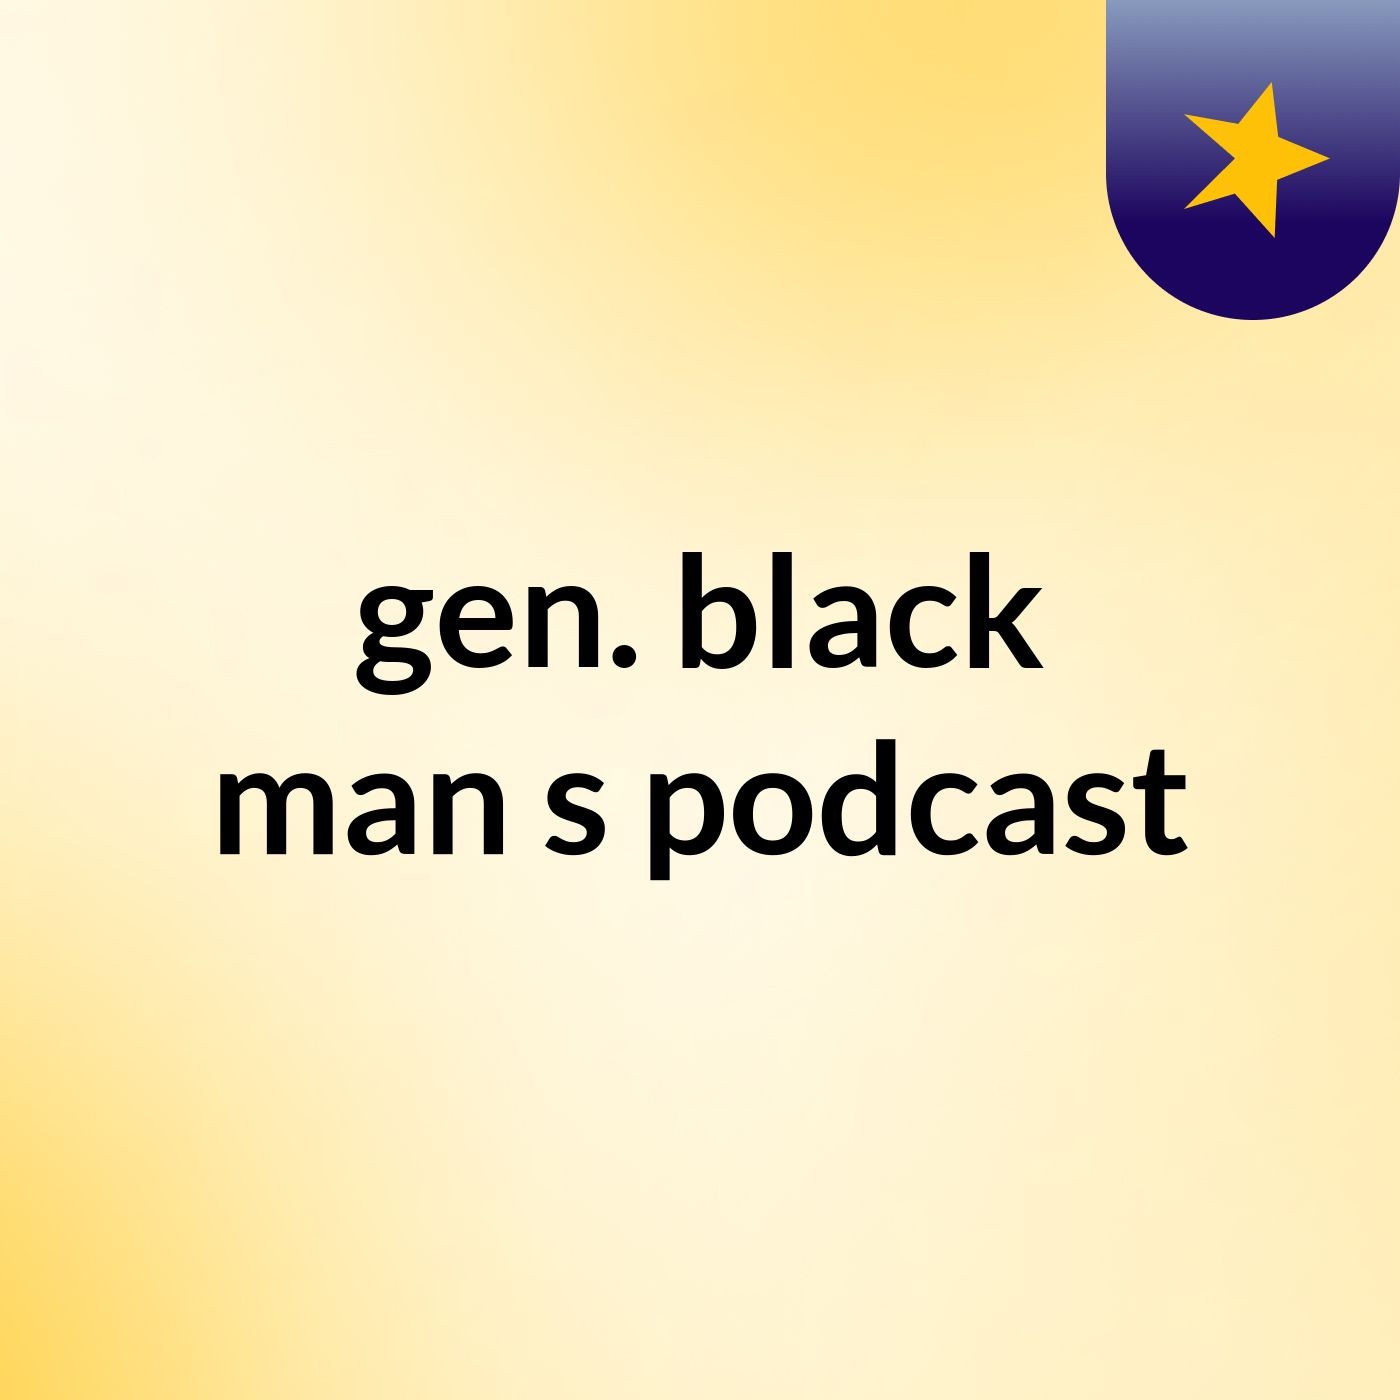 gen. black man's podcast